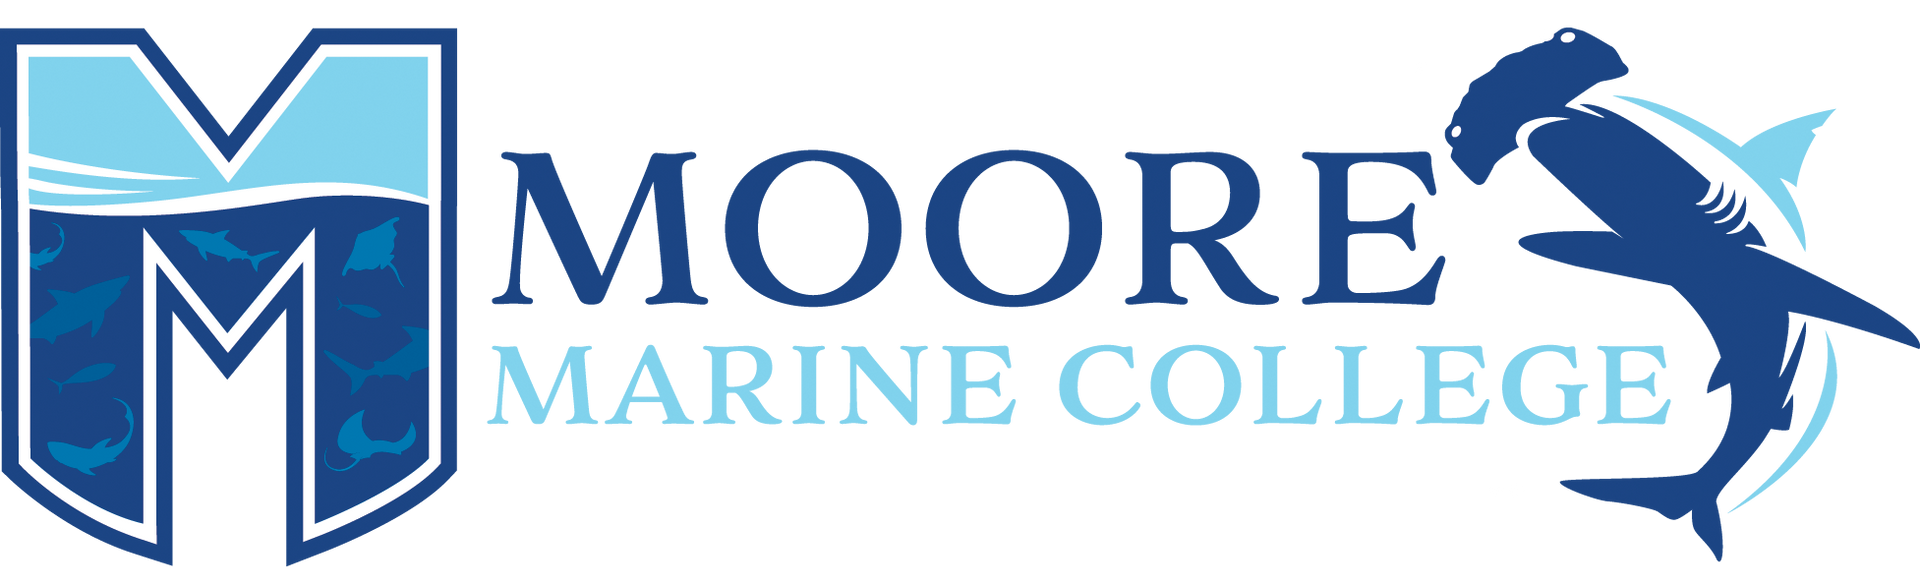 Moore Marine College